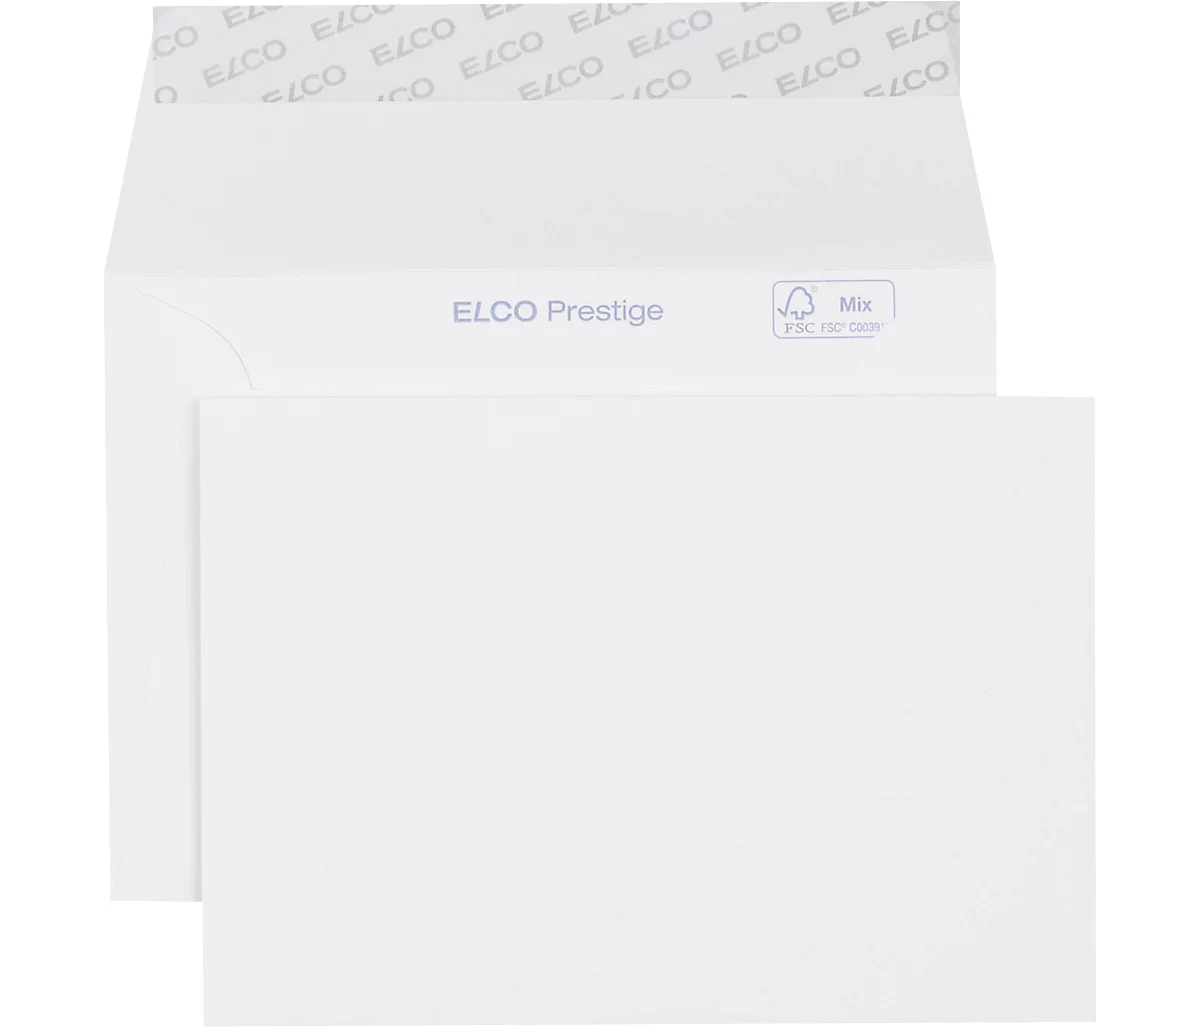 Elco Office cartes, A6, blanc 